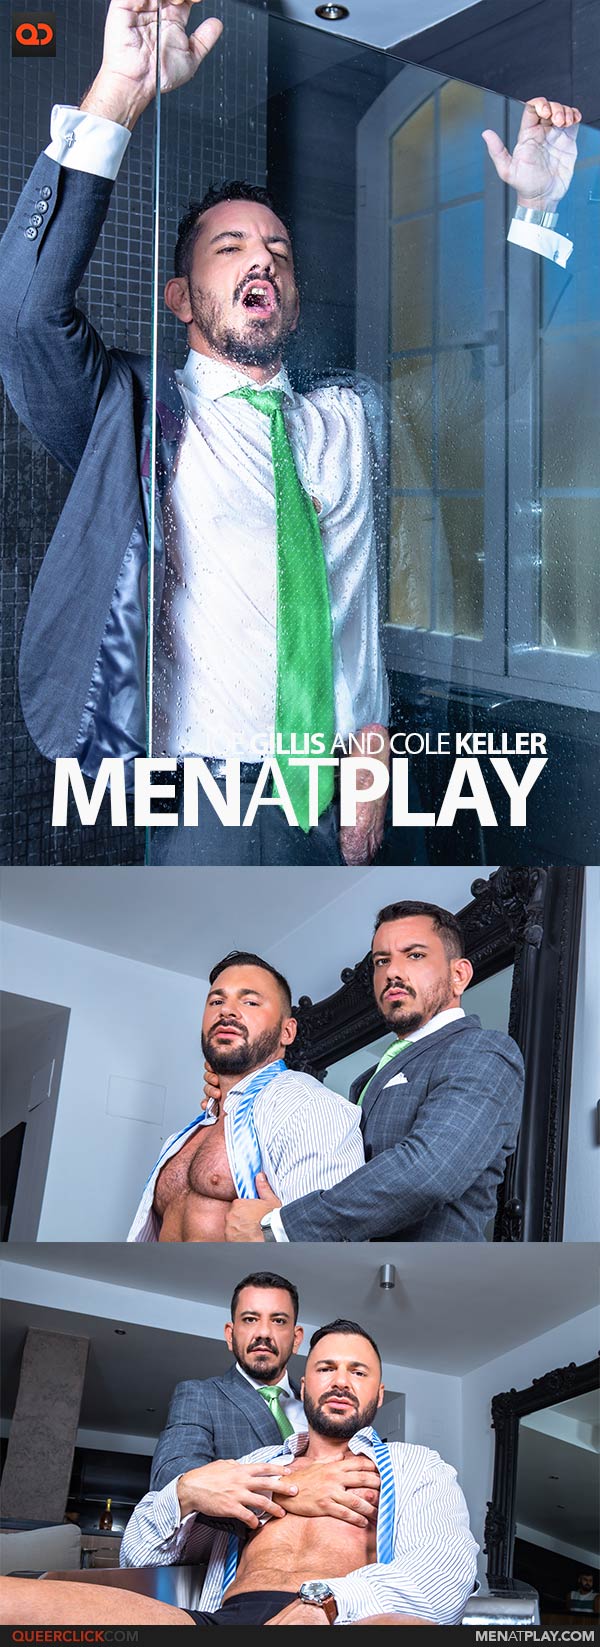 MenAtPlay: Joe Gillis and Cole Keller